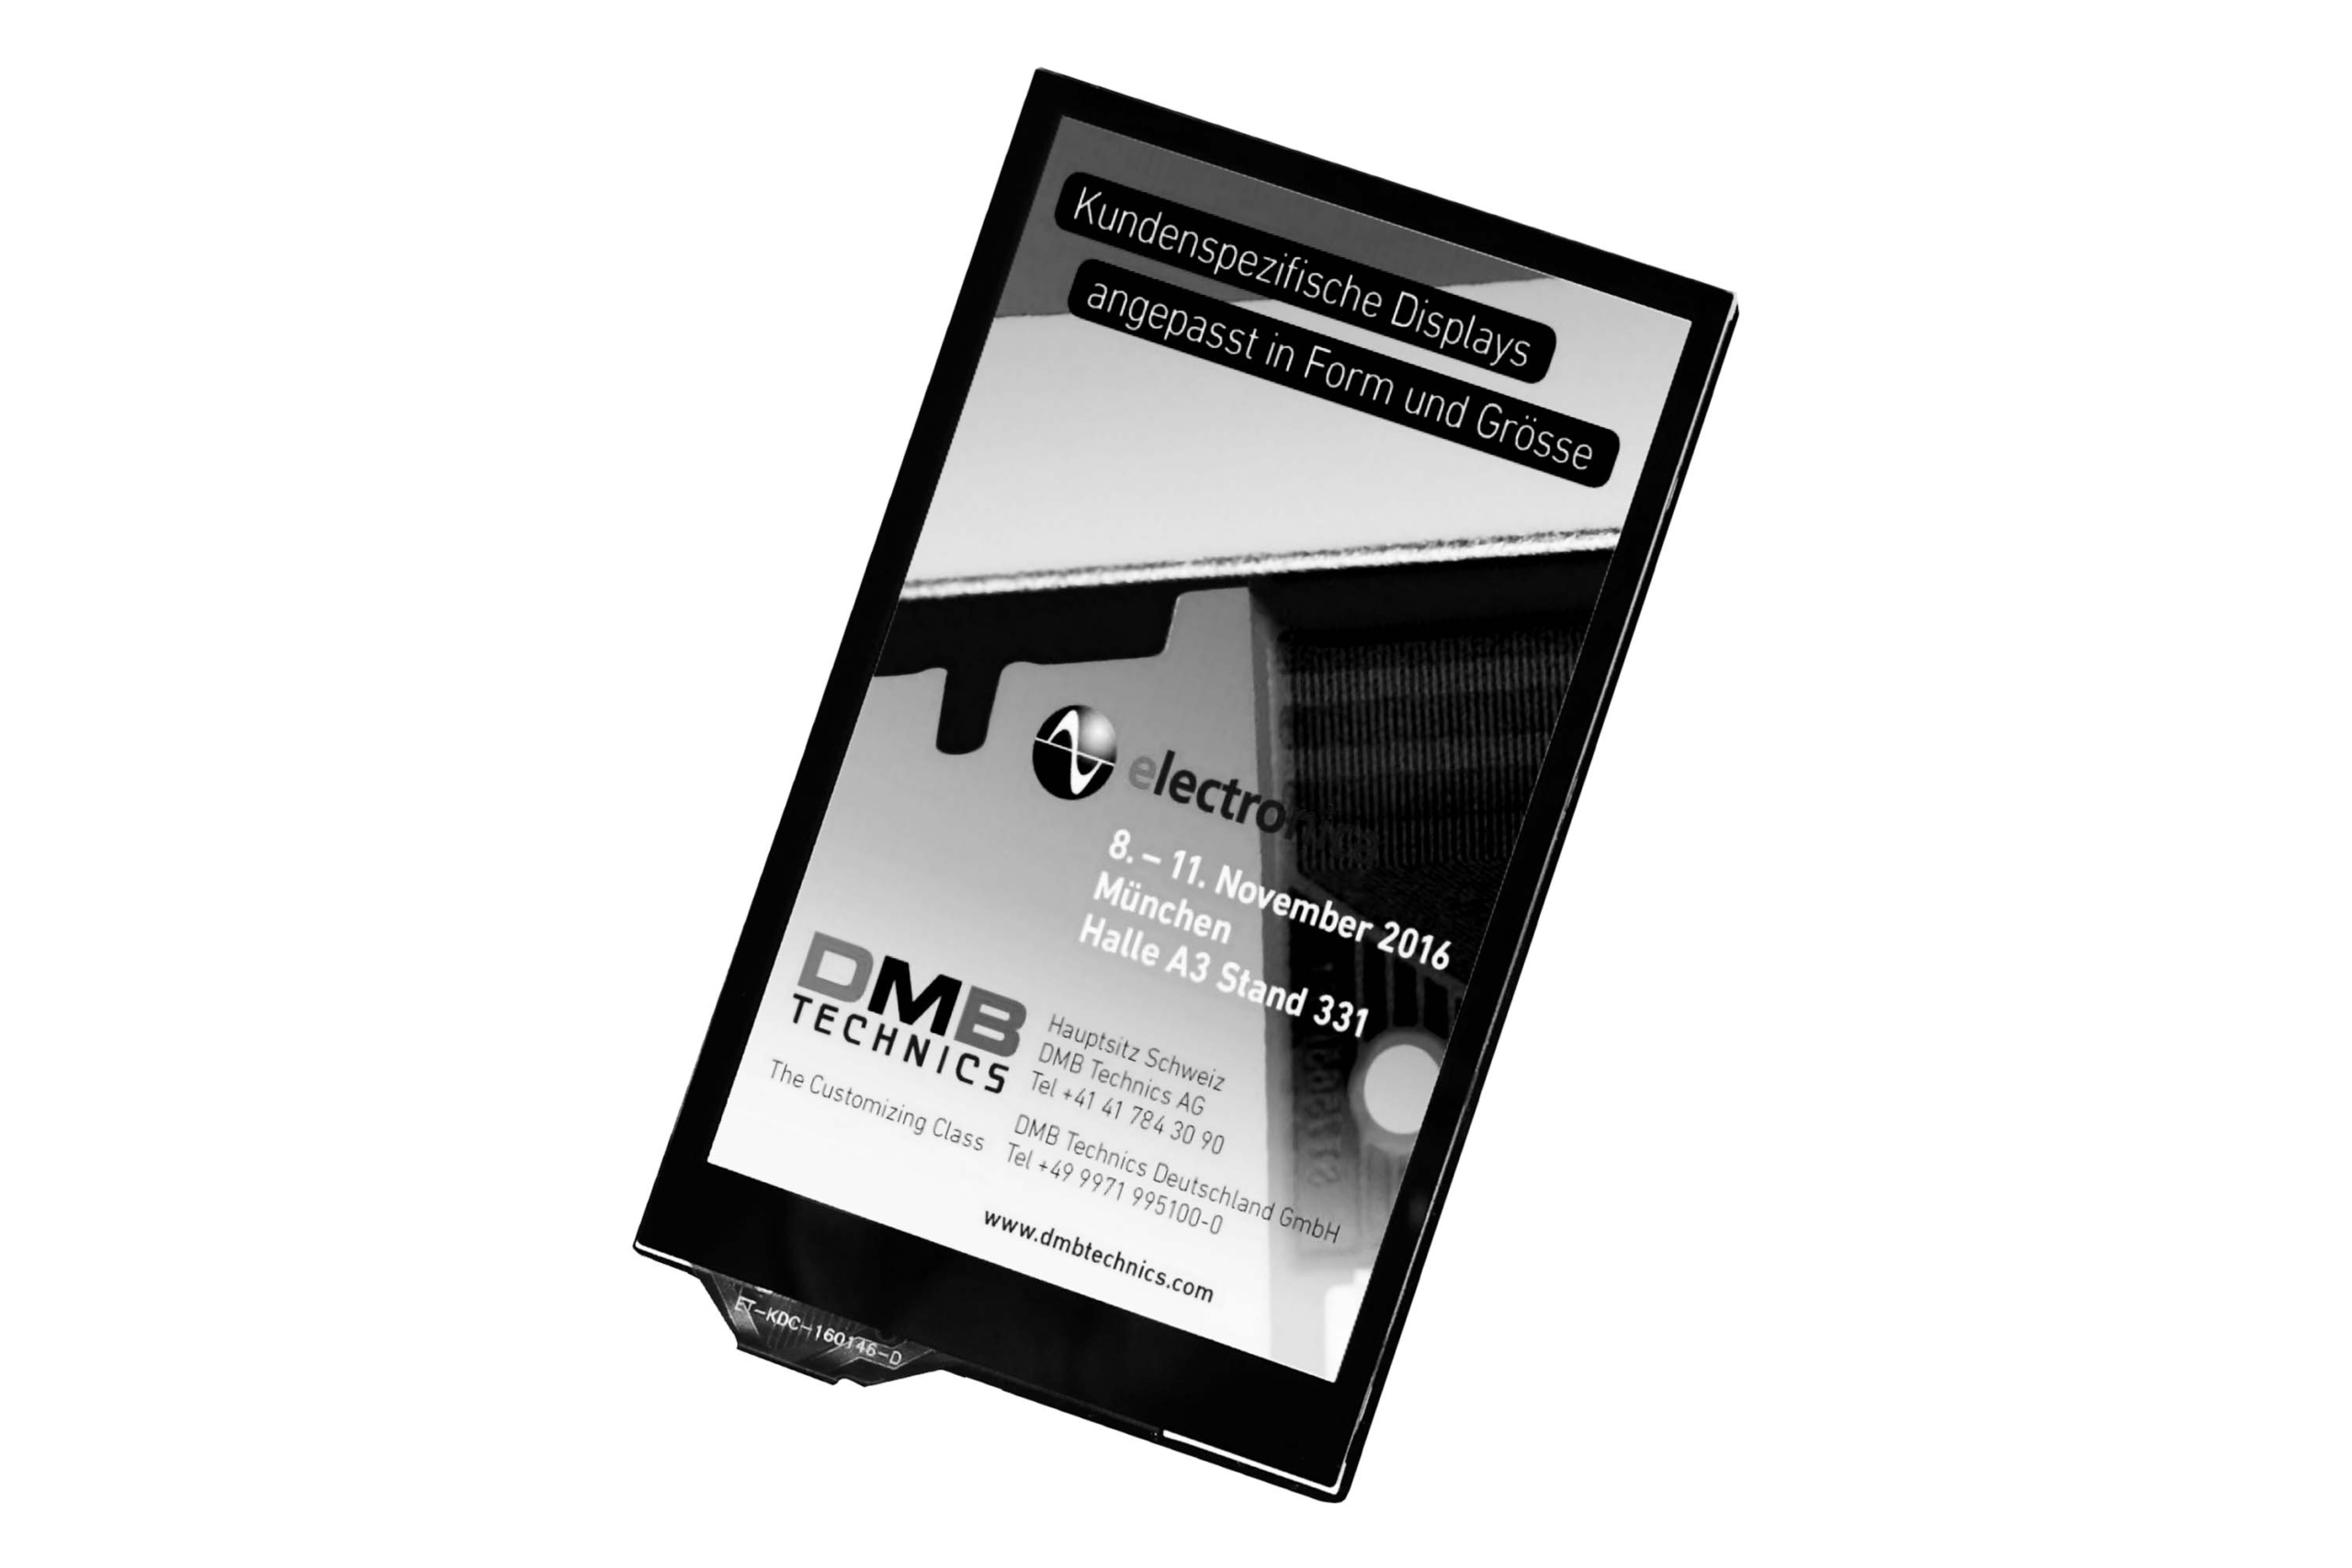 4.3" IPS-TFT Display - DMB Technics